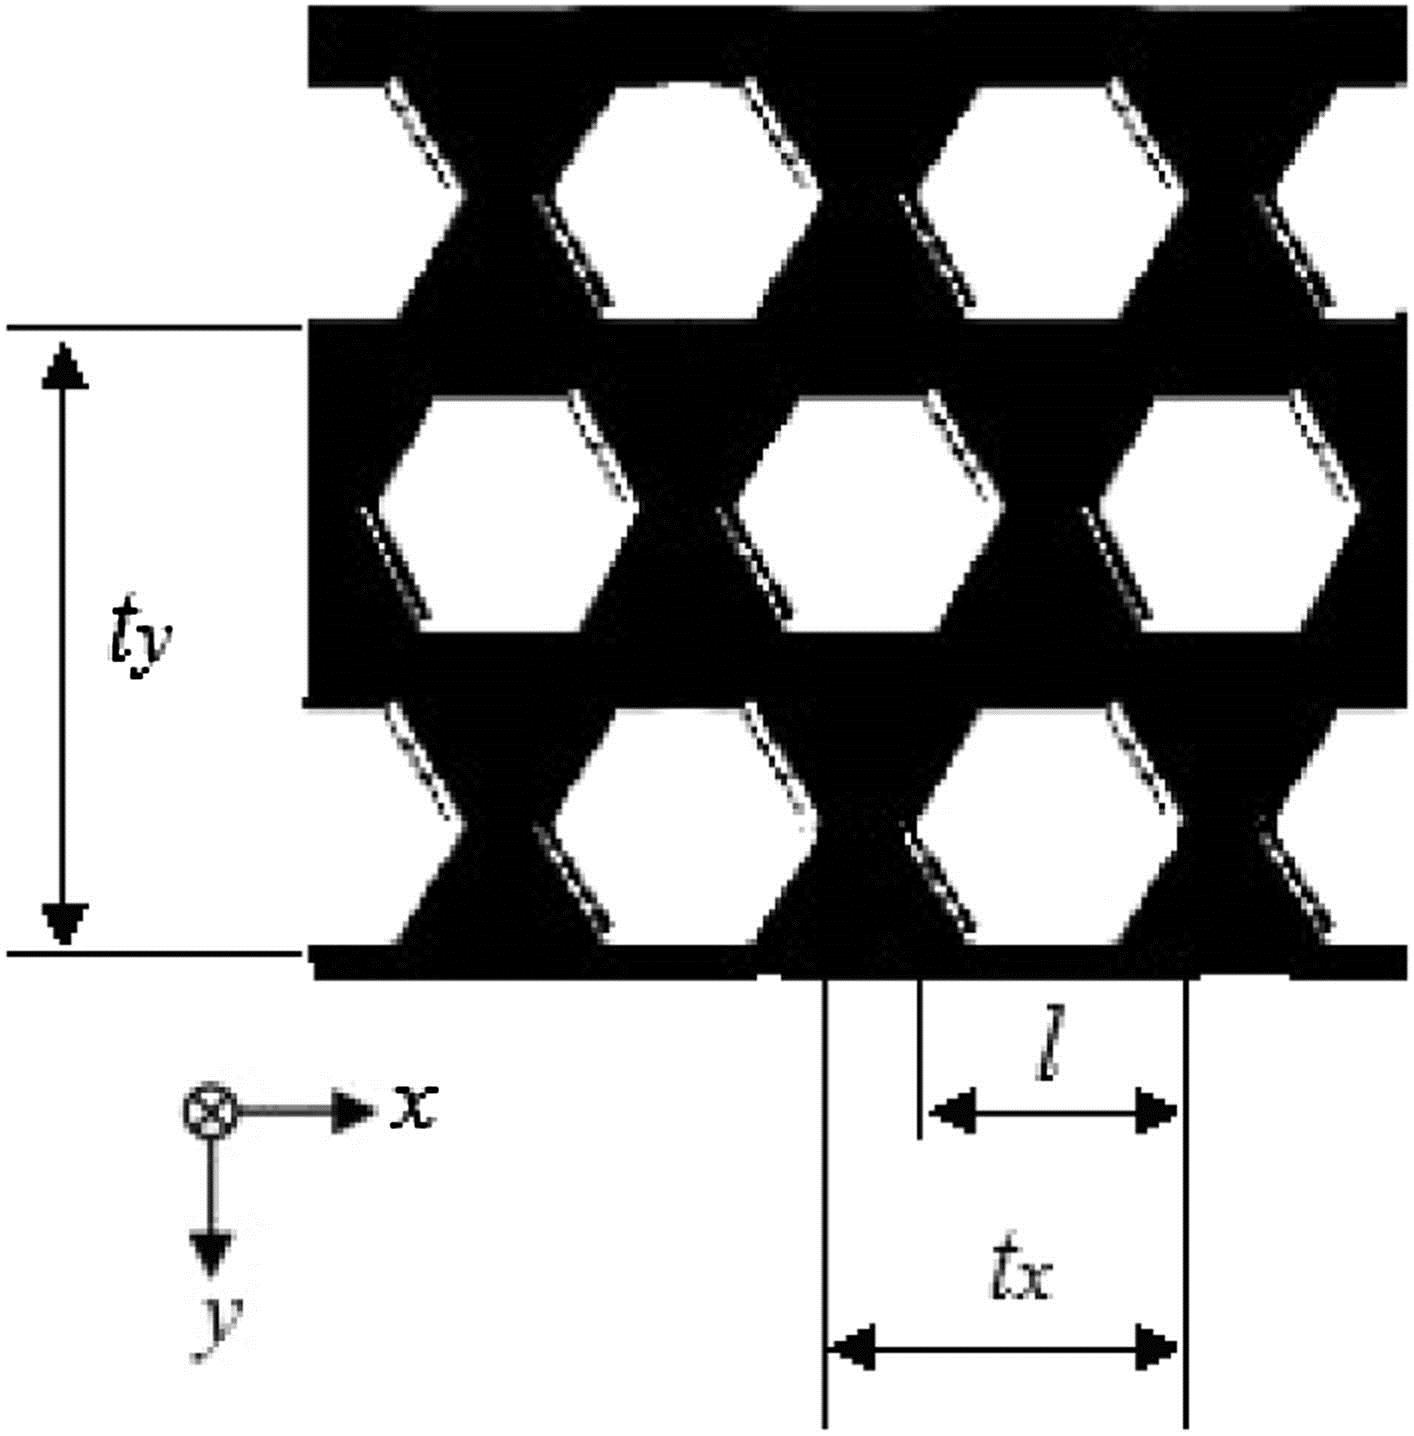 Hexagonal array grating.